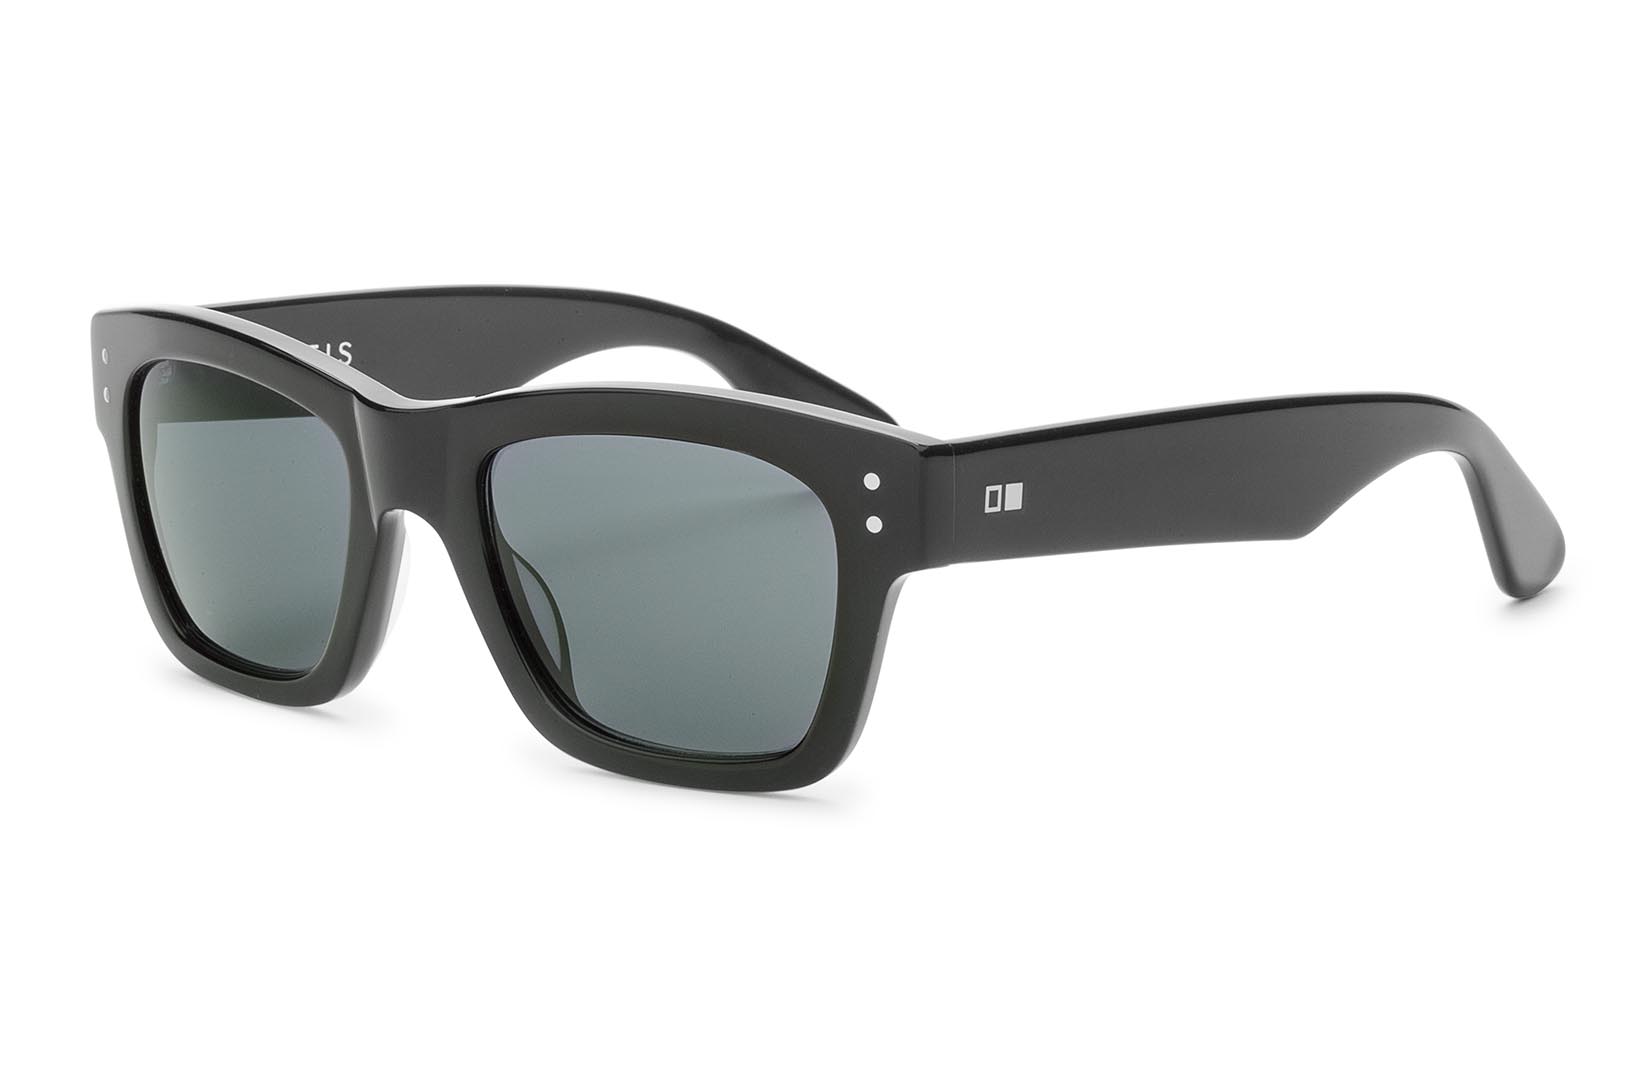 New Otis Sunglasses Range now instore a